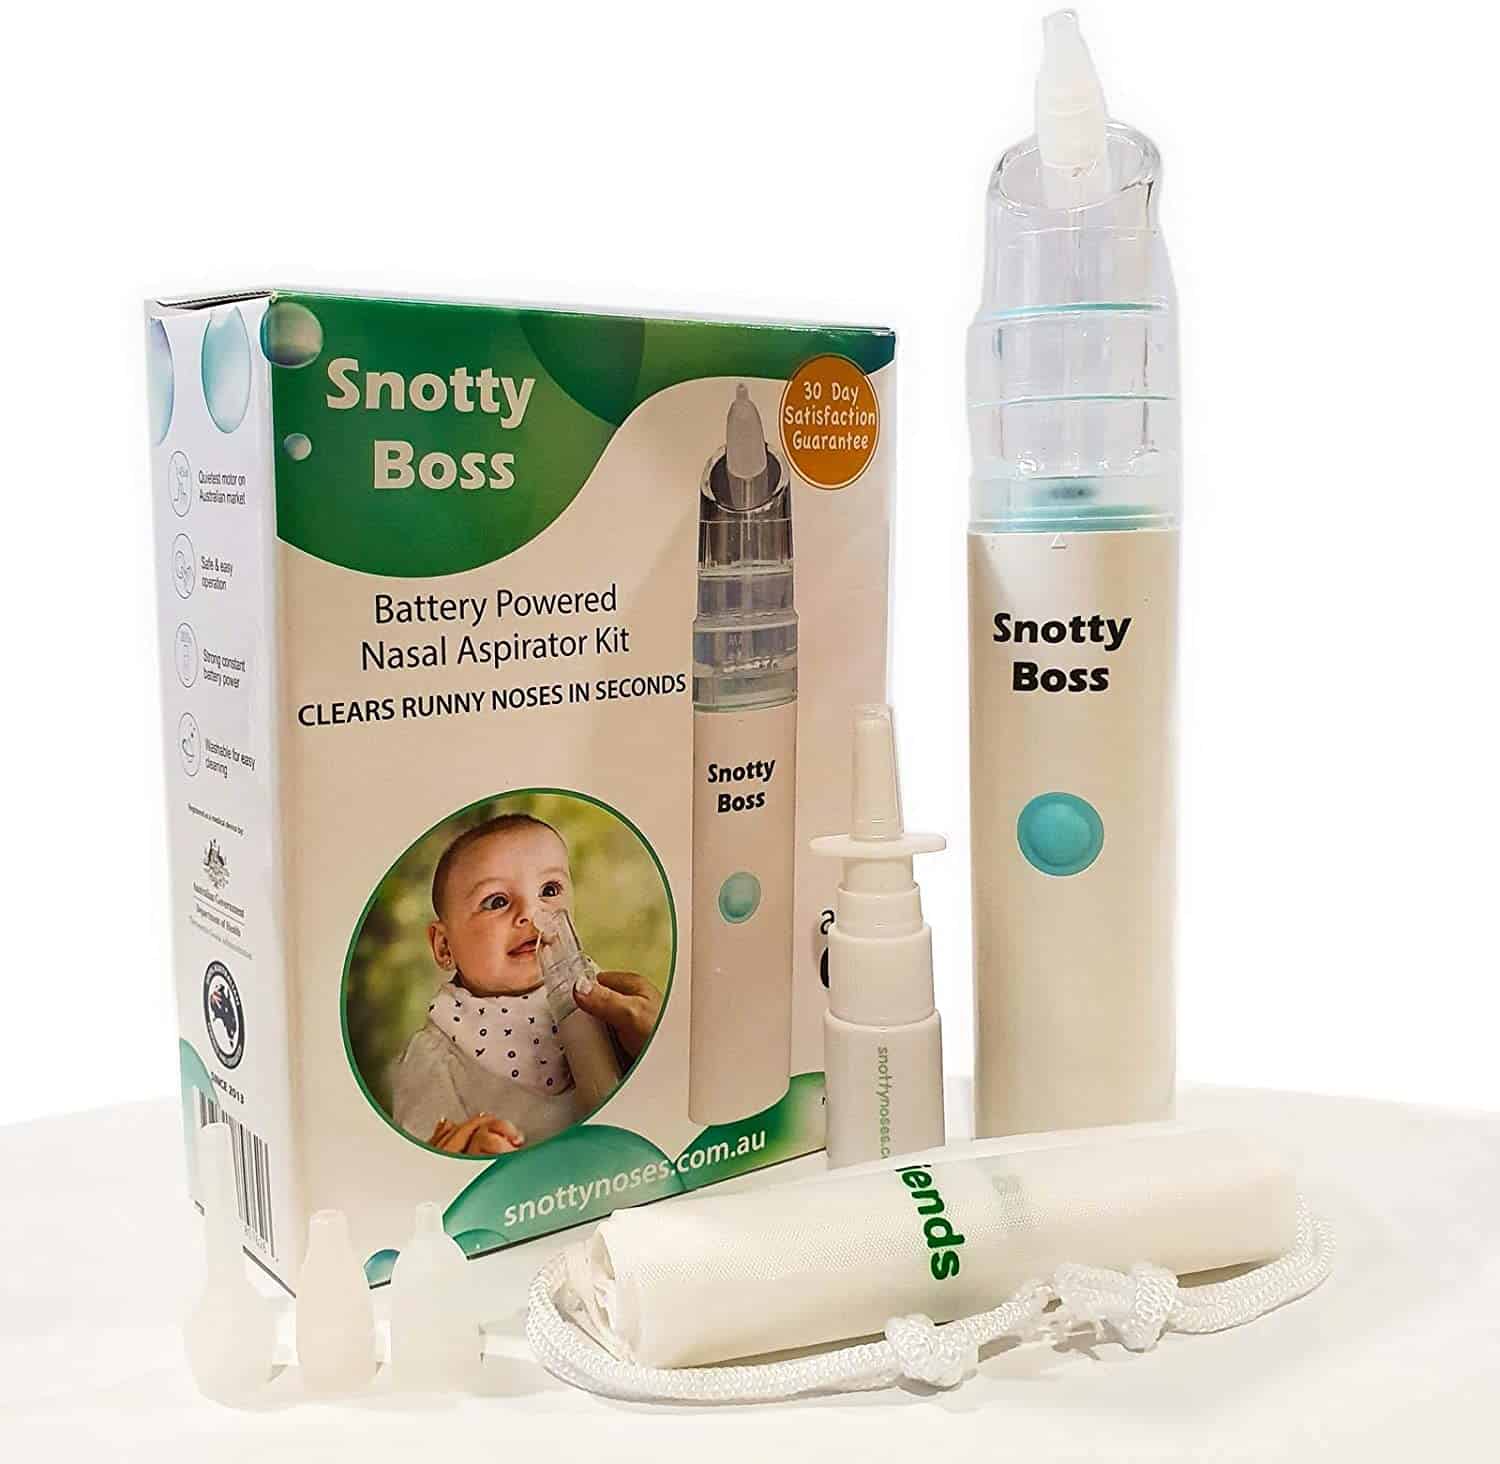 SNOTTY BOSS Battery Powered Nasal Aspirator Kit